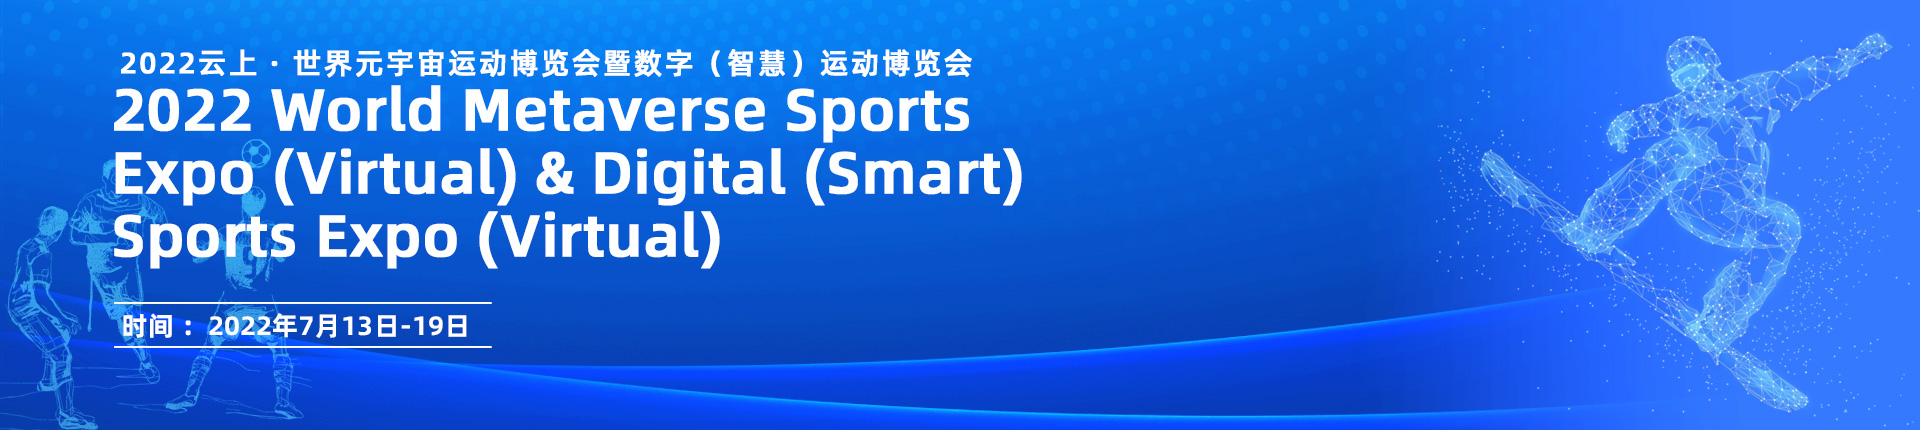 2022 World Metaverse Sports Expo (Virtual) & Digital (Smart) Sports Expo (Virtual)